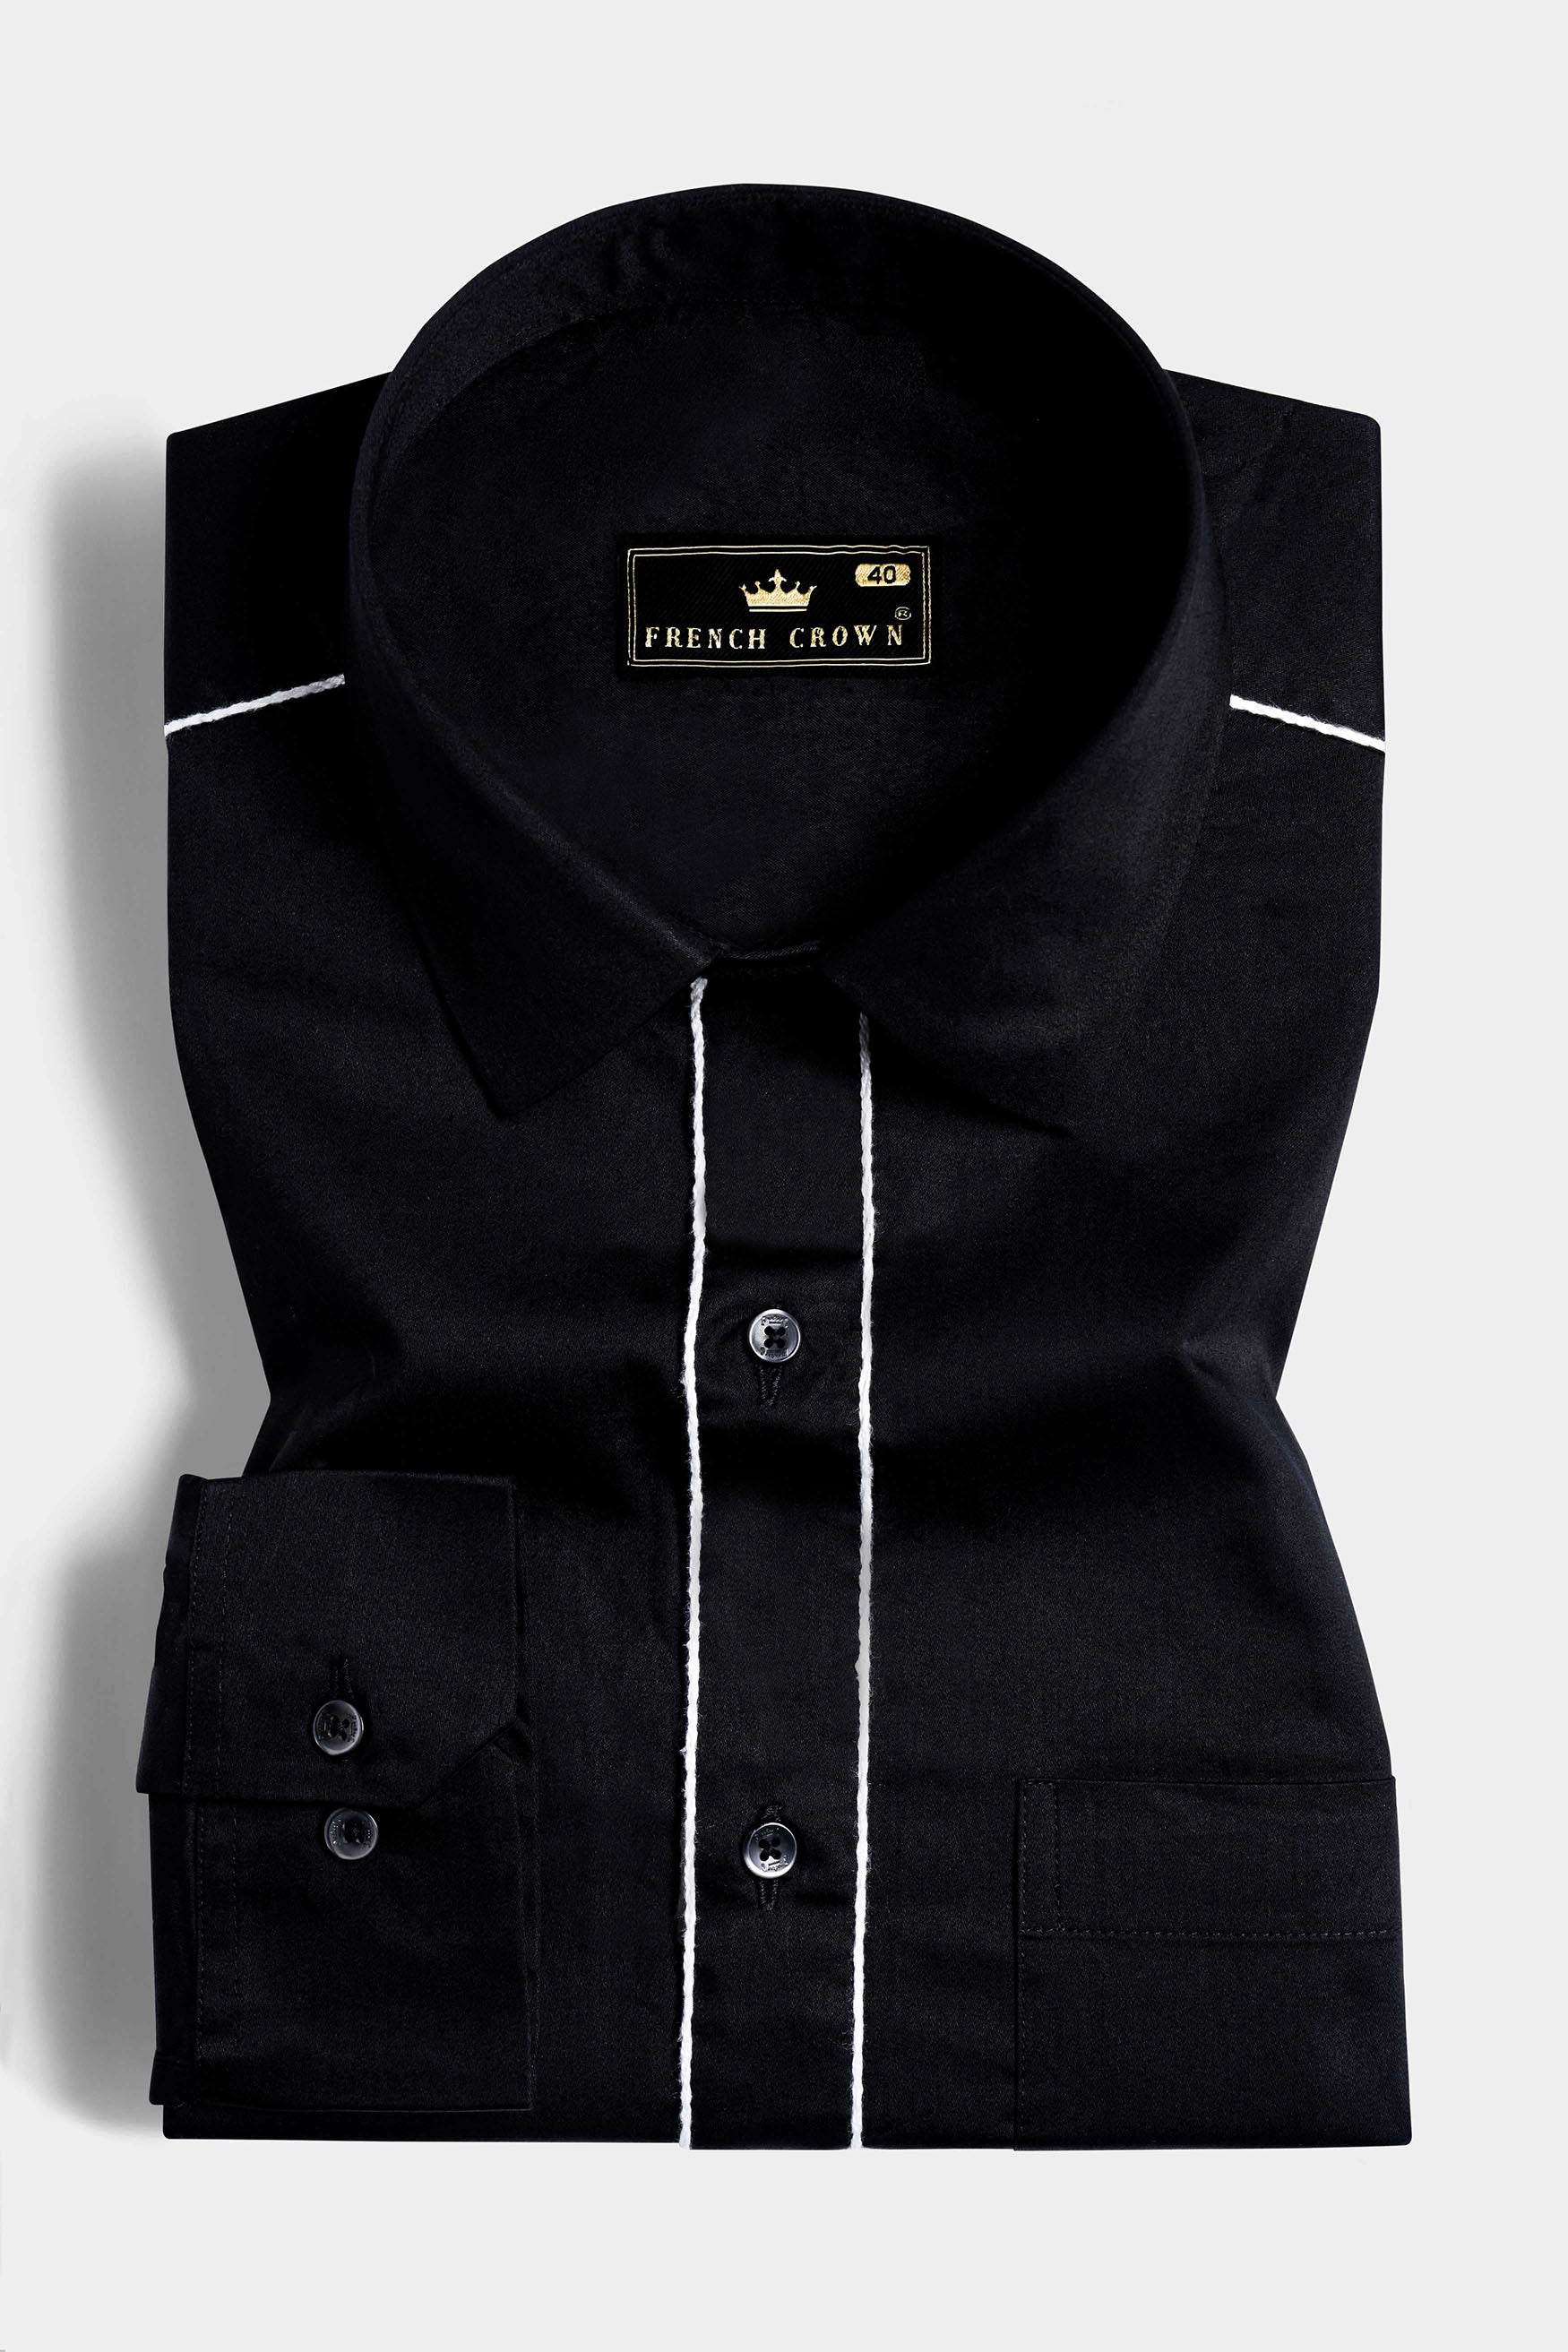 Jade Black with White Piping Work Subtle Sheen Super Soft Premium Cotton Designer Shirt